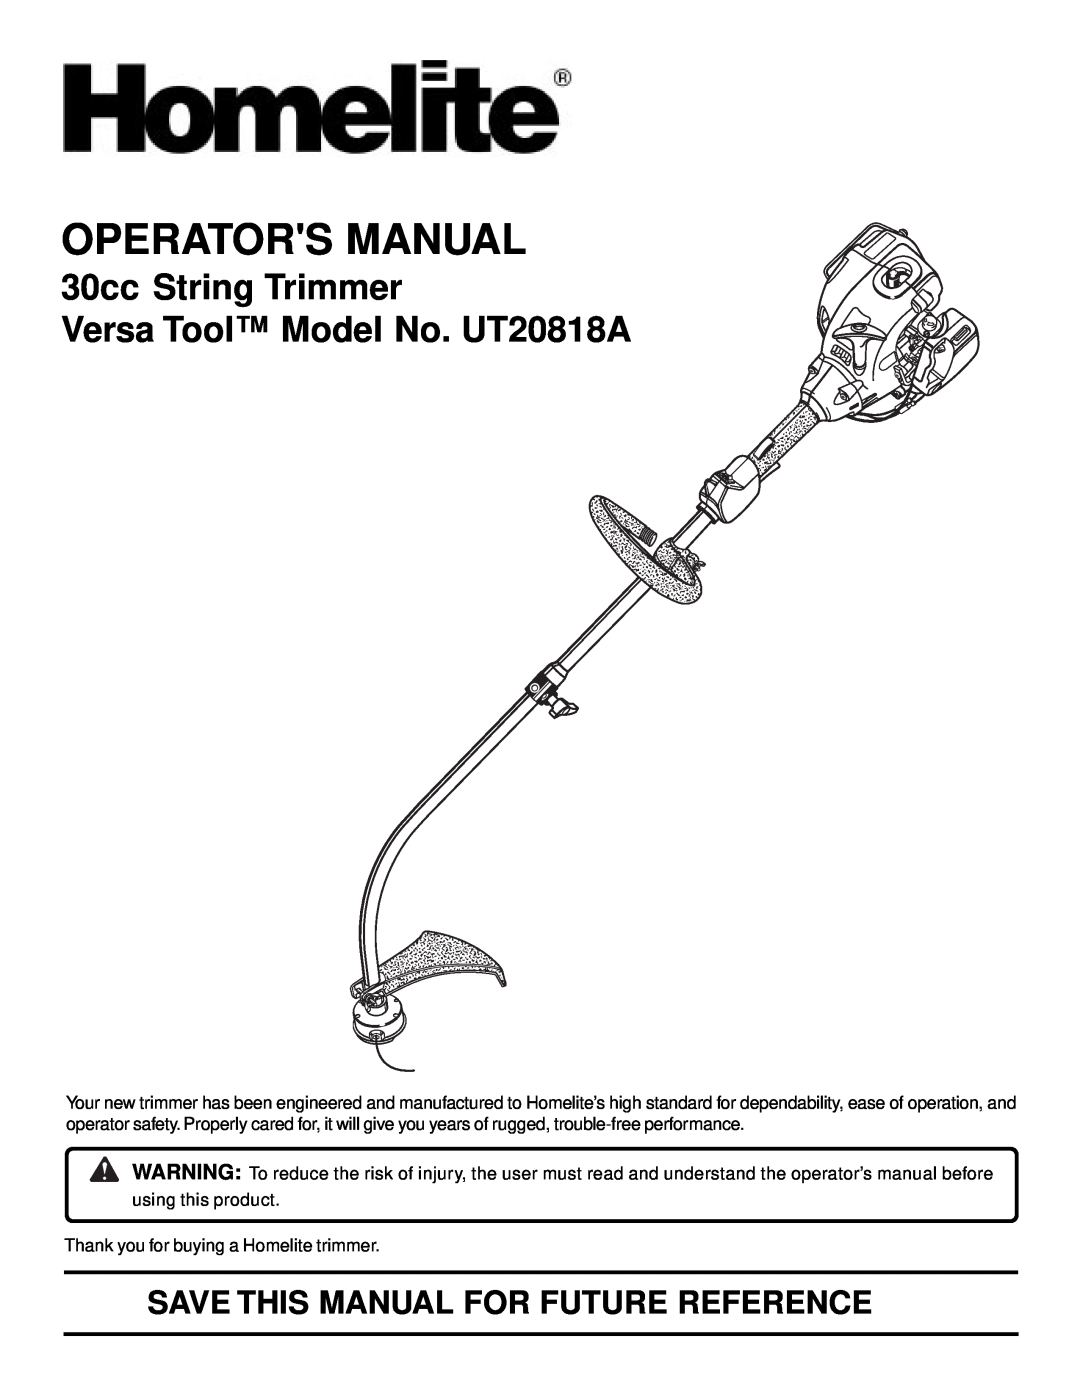 Homelite manual Operators Manual, 30cc String Trimmer Versa Tool Model No. UT20818A 